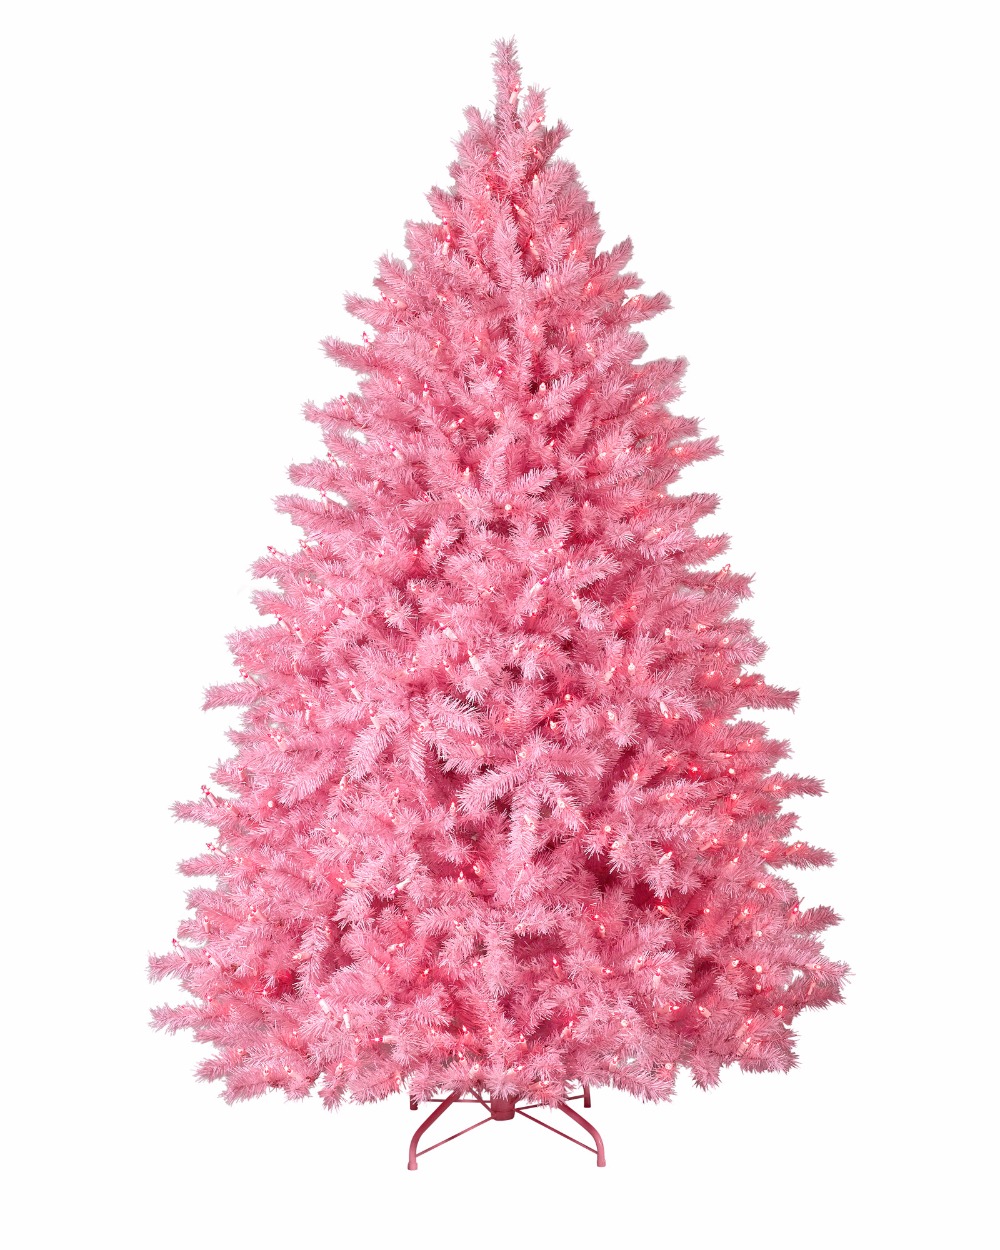 pinkchristmastree